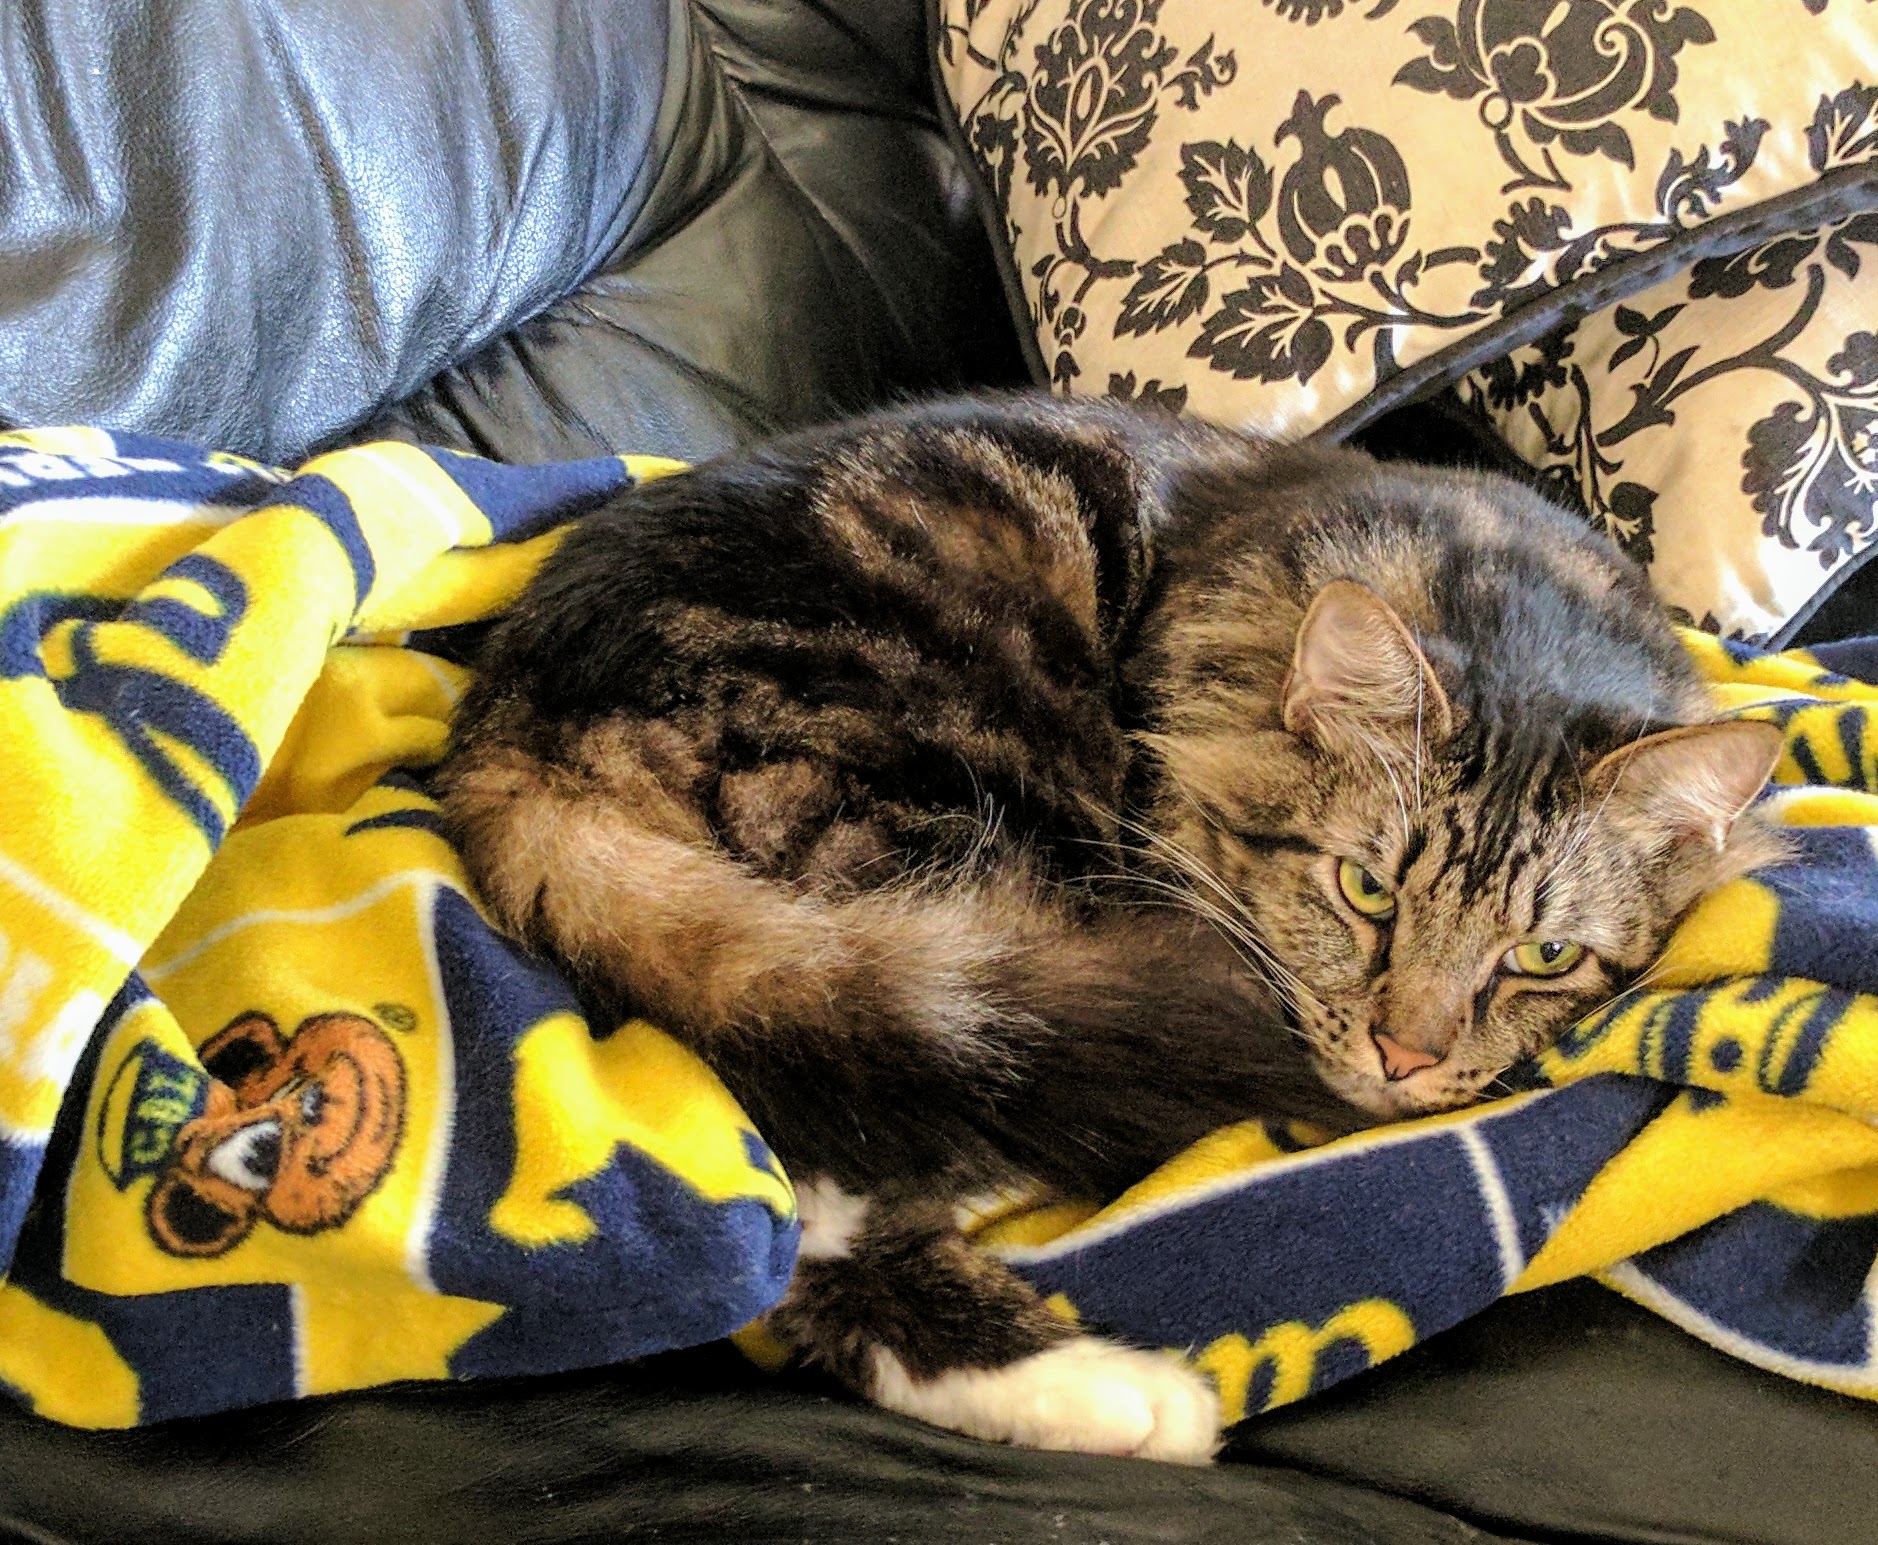 A cat lays on a UC Berkeley blanket